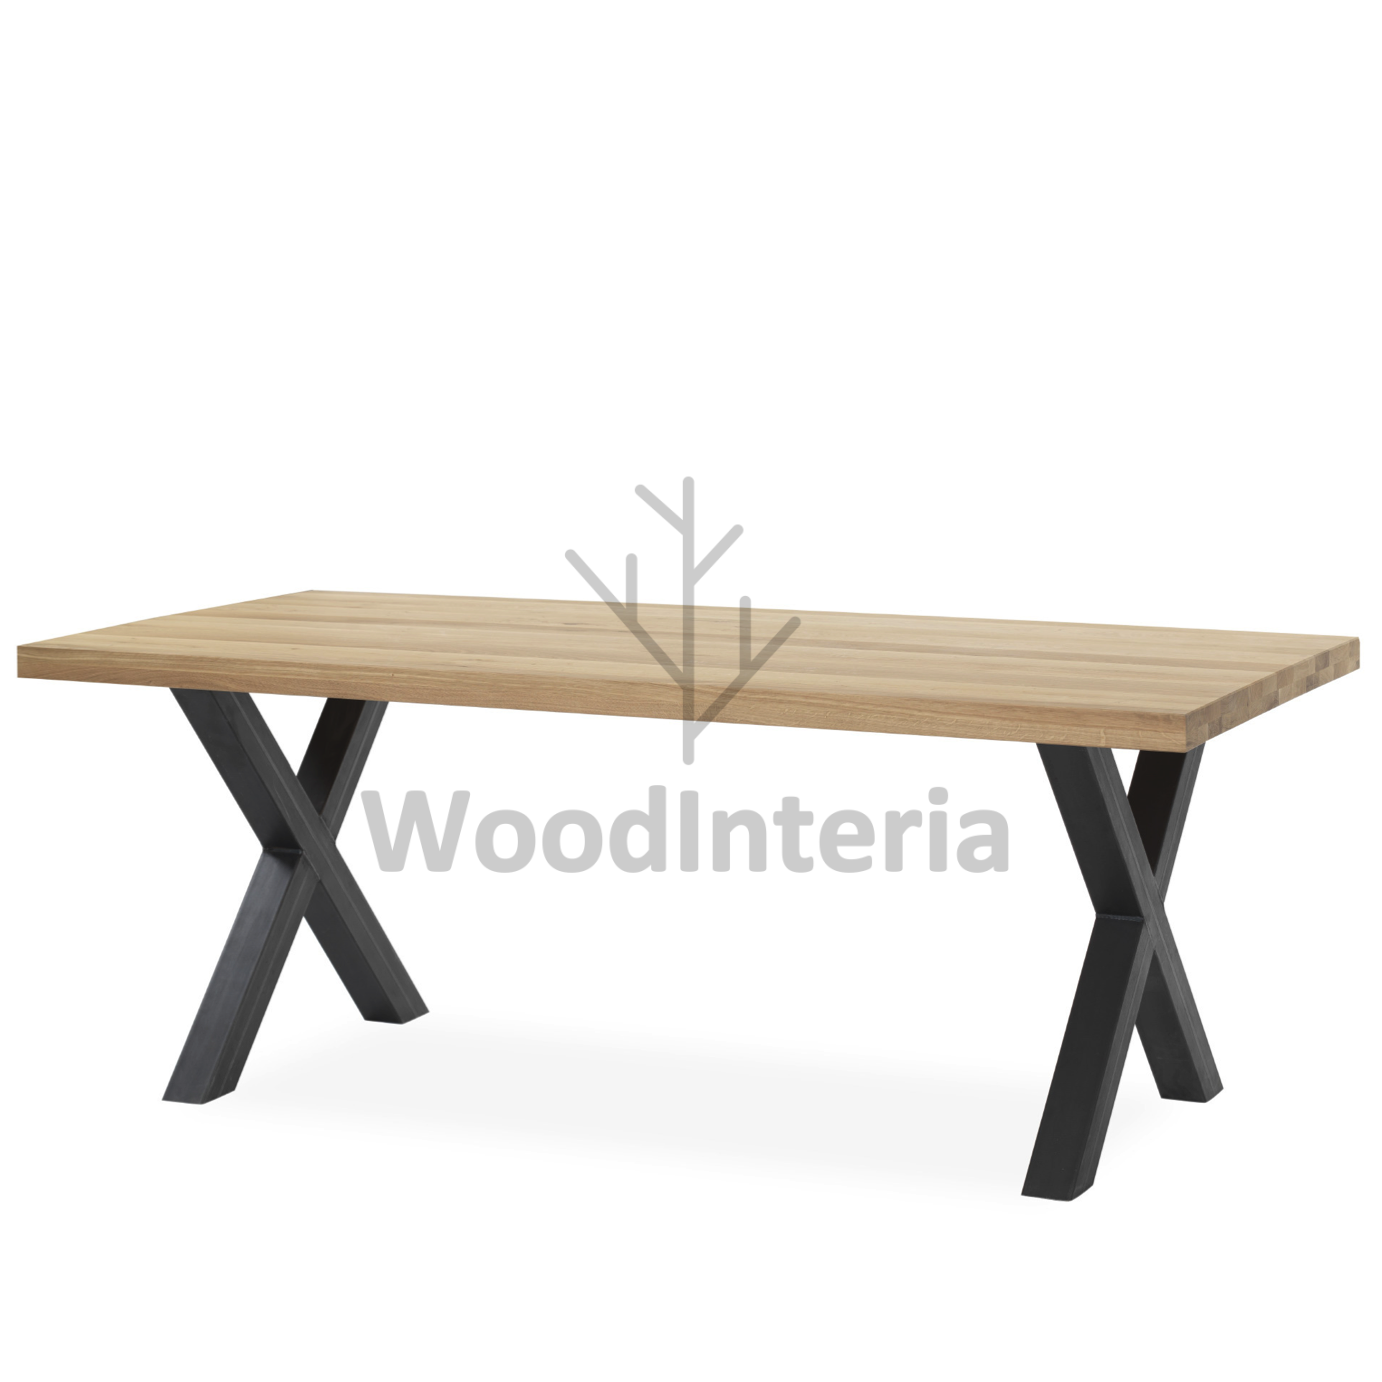 фото обеденный стол double top xx dining в стиле лофт эко | WoodInteria